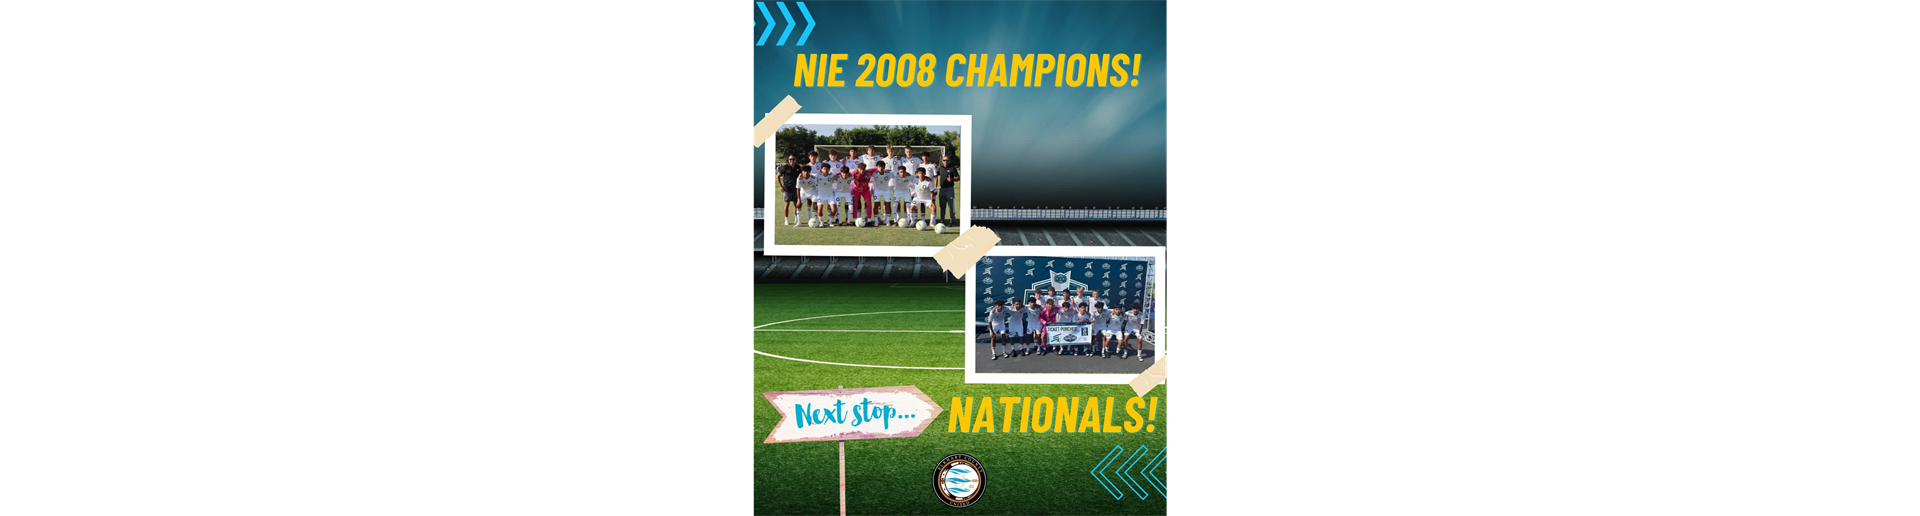 NIE 2008 Champions